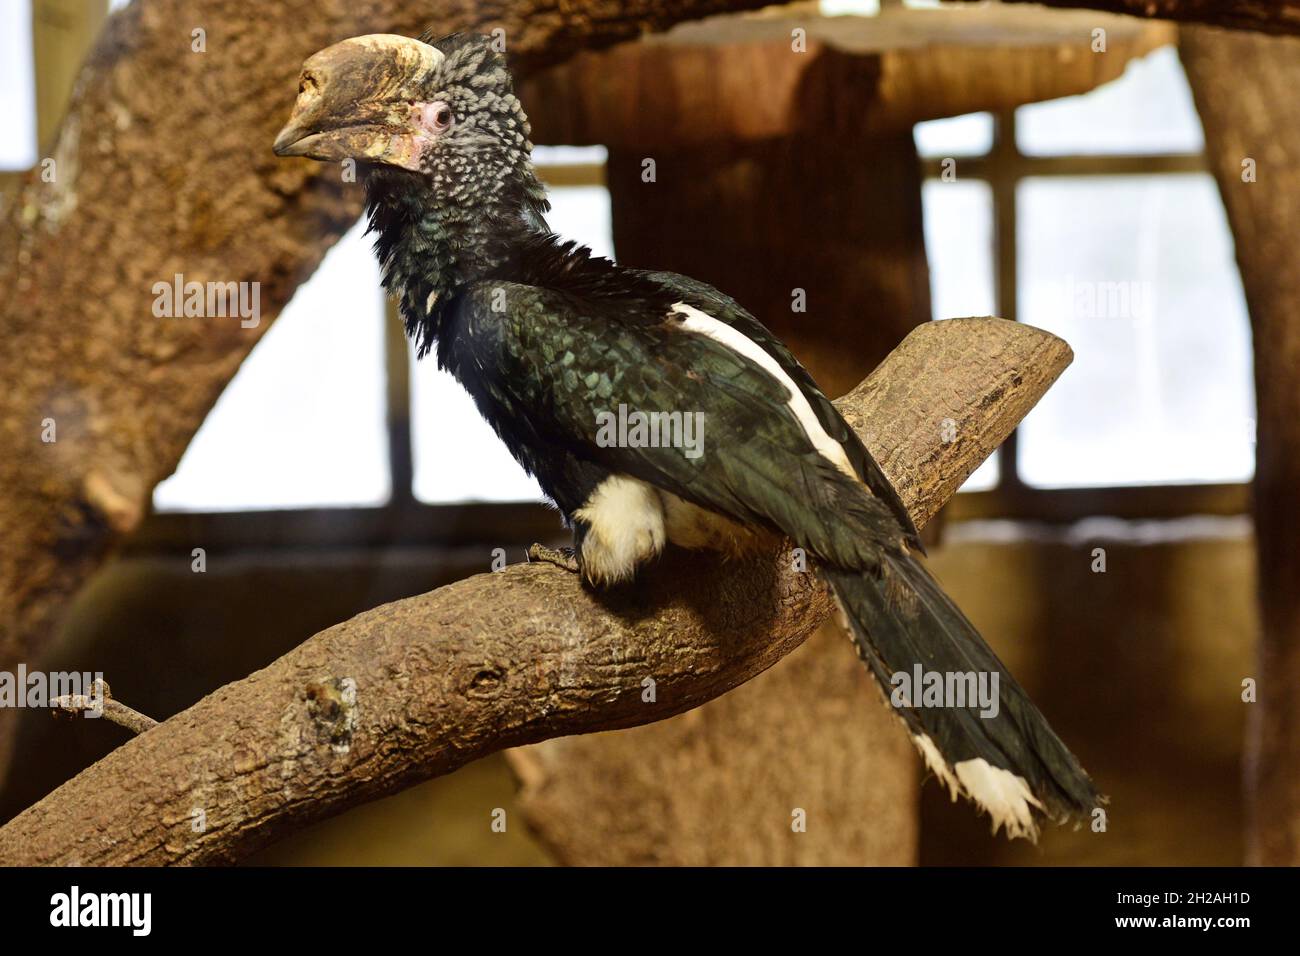 Silberwangenhornvogel im Zoo Schmiding, Krenglbach, Oberösterreich, Österreich, Europa - Silvery cheeked hornbill in Schmiding Zoo, Upper Austria, Aus Stock Photo